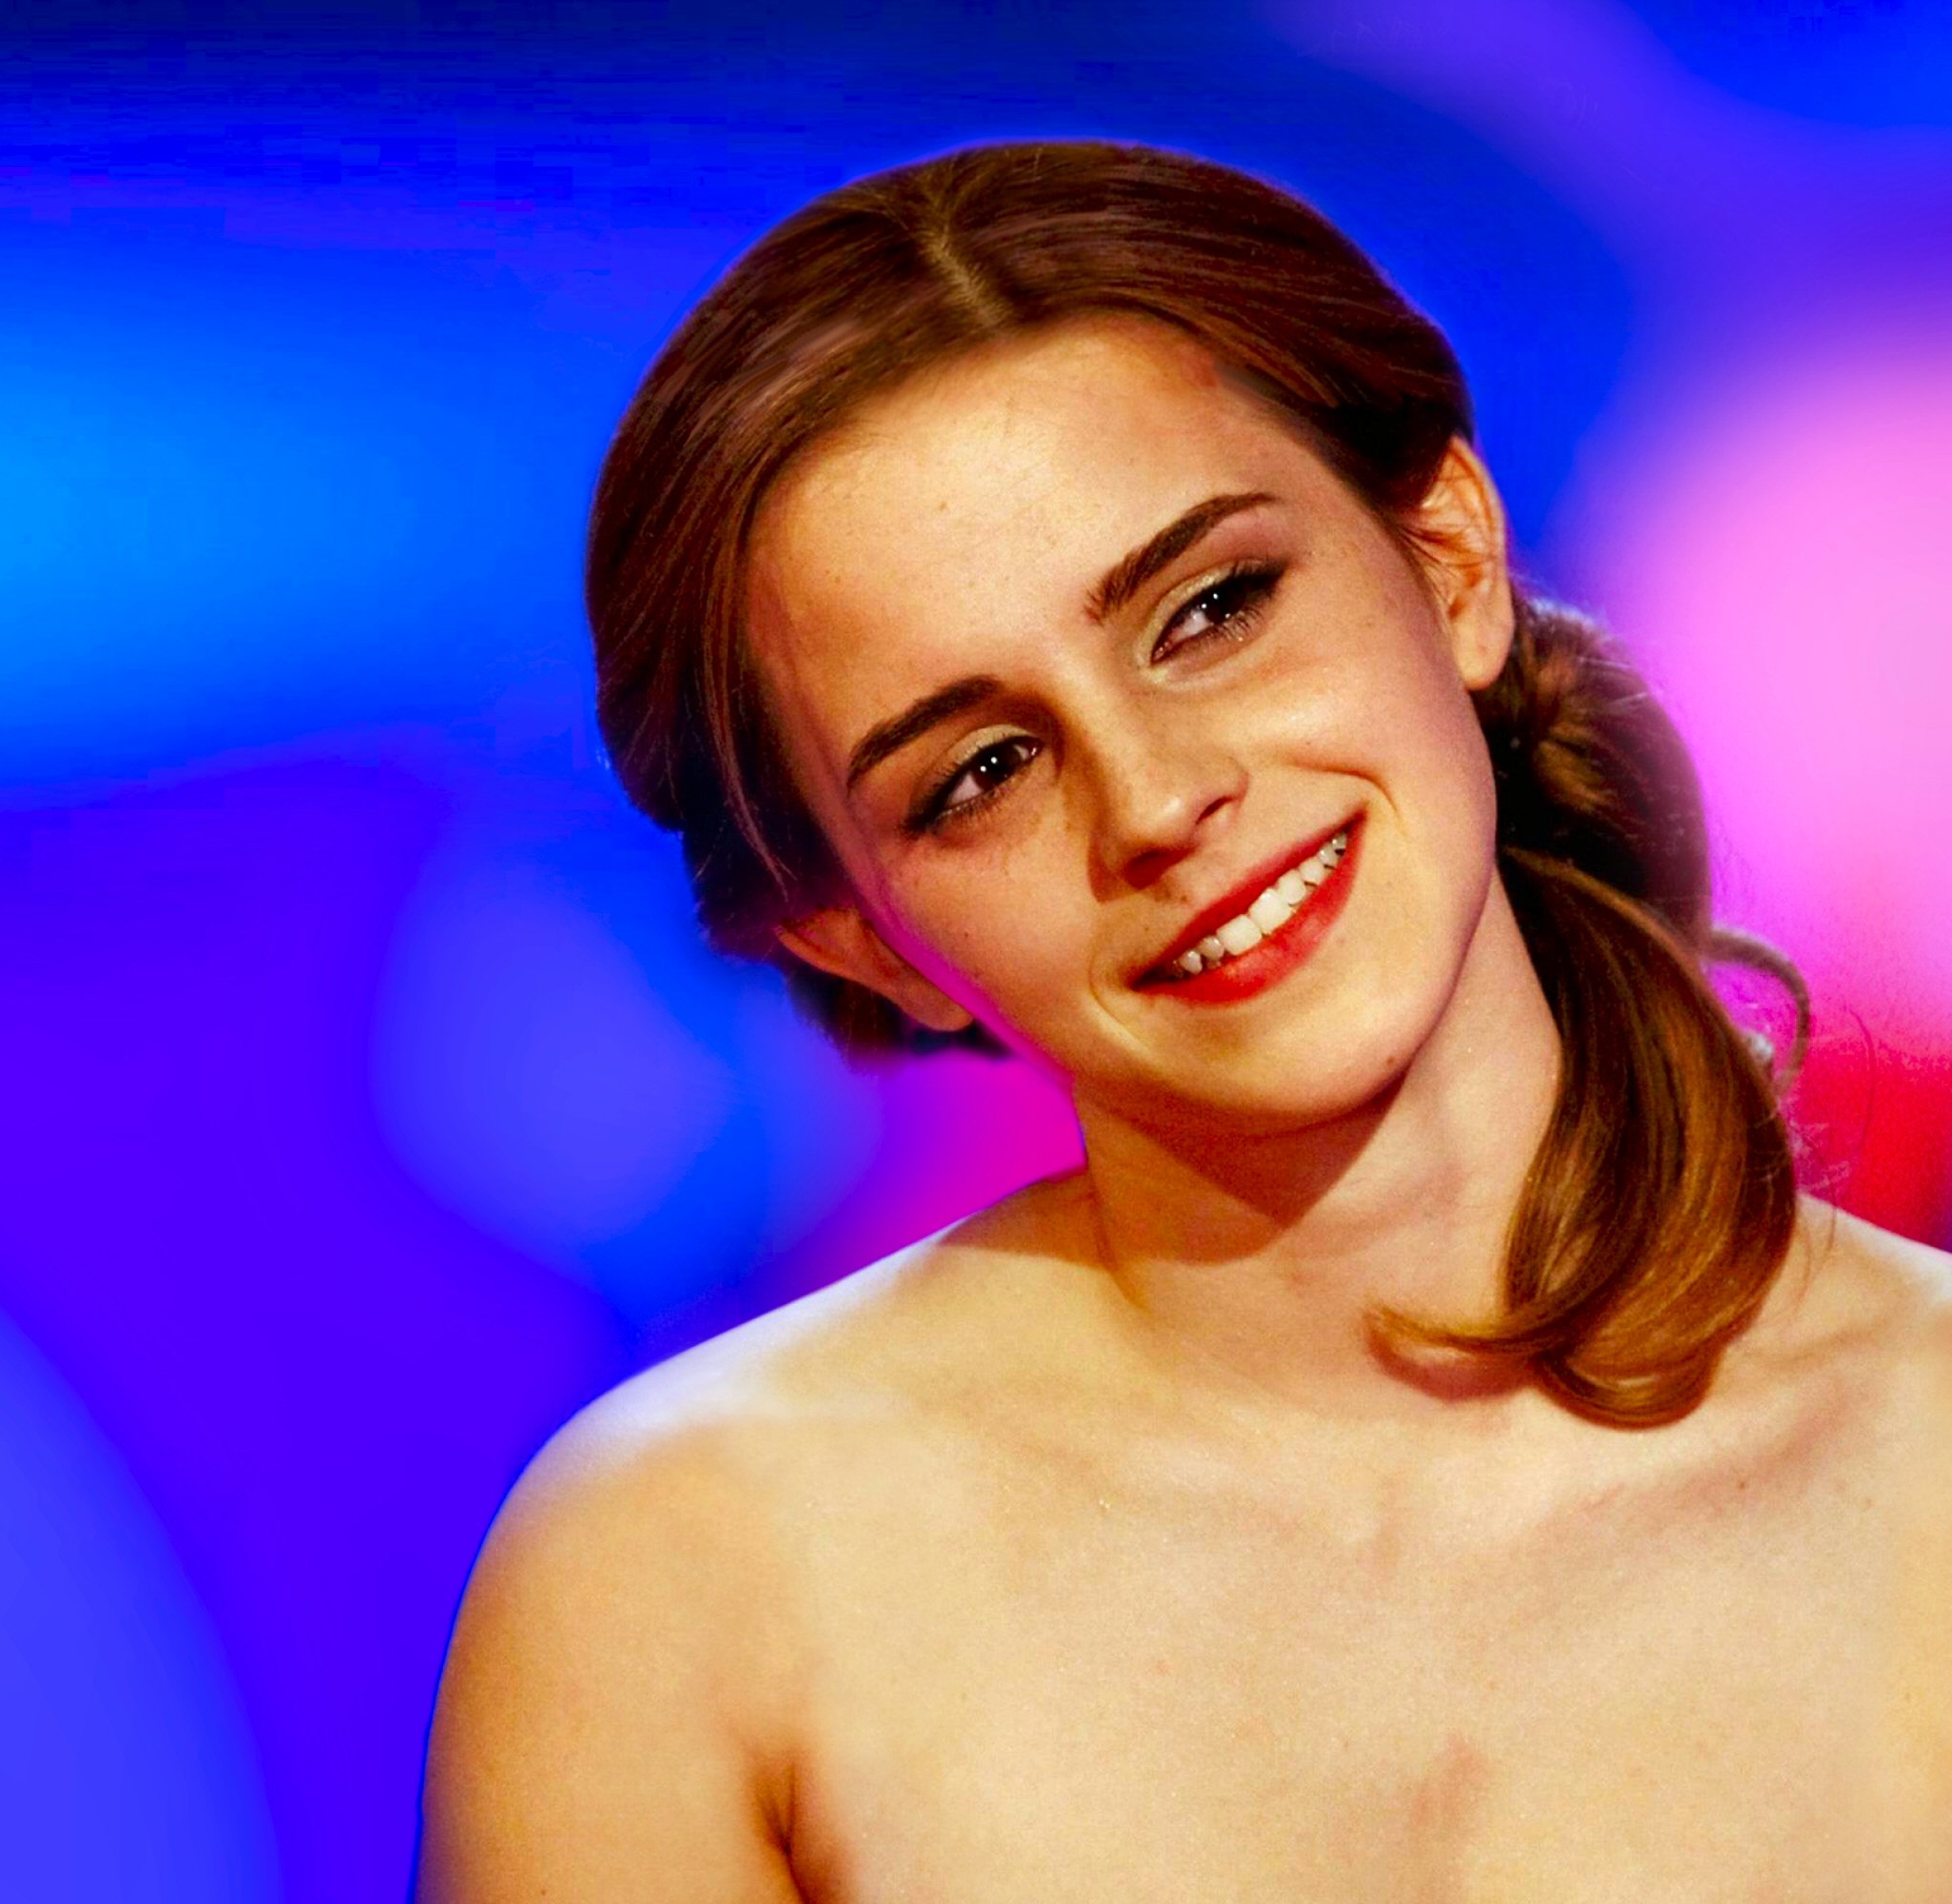 2460x2400 Emma Watson Topless Images 2460x2400 Resolution Wallpaper Hd Celebrities 4k